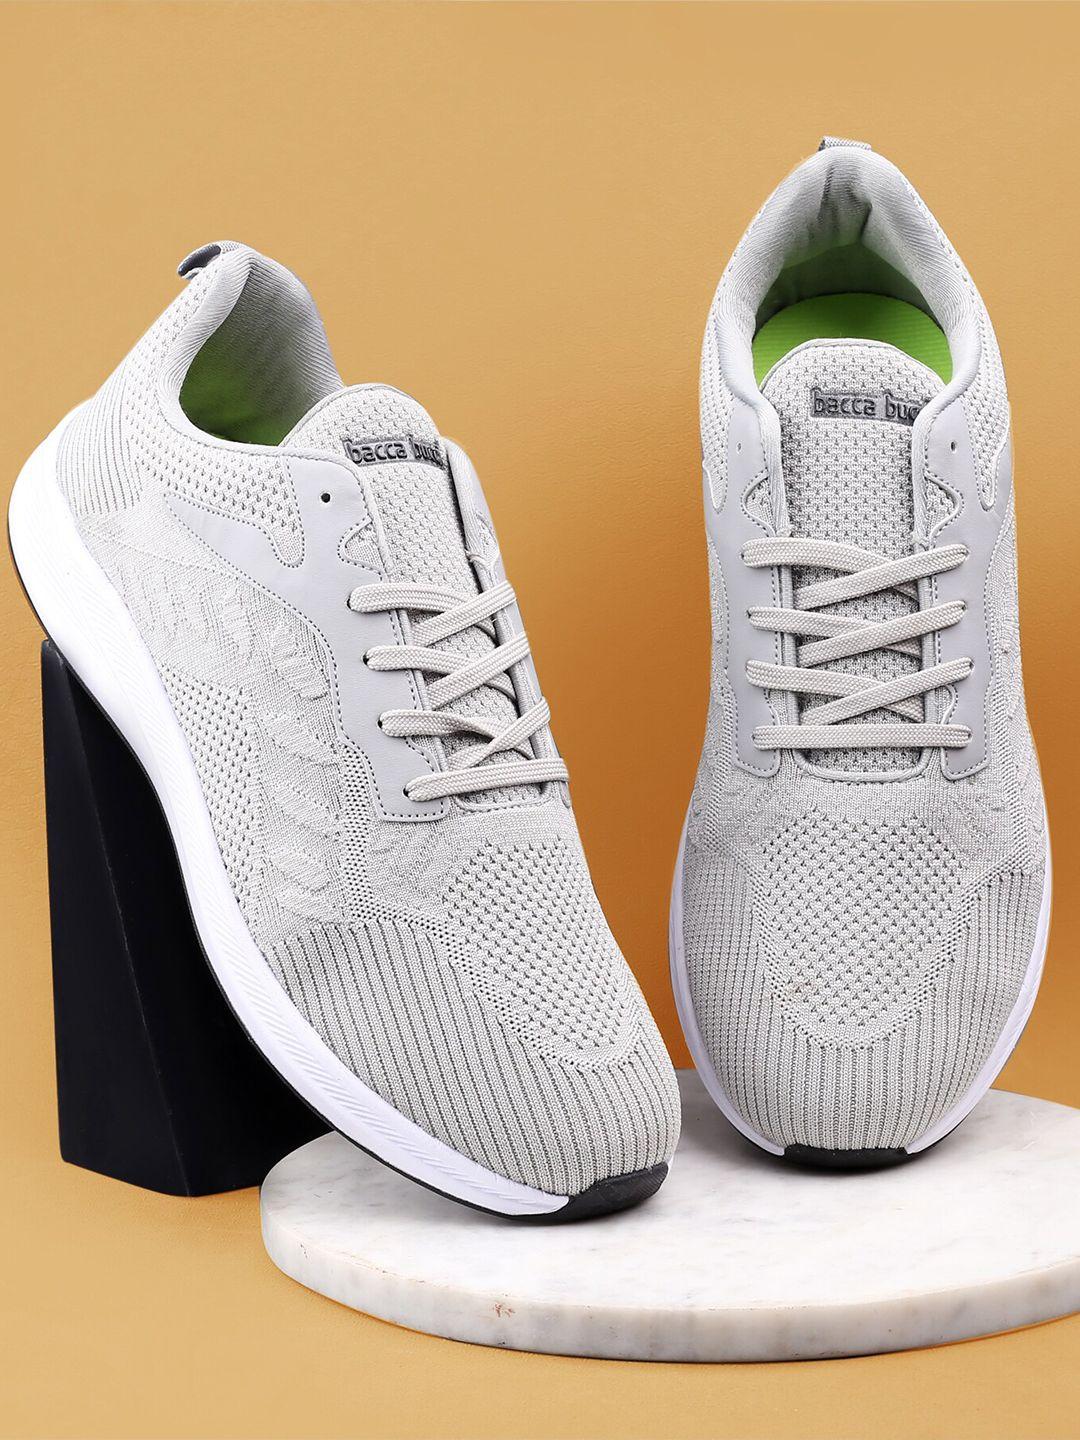 bacca bucci men project plus lightweight mesh running shoes